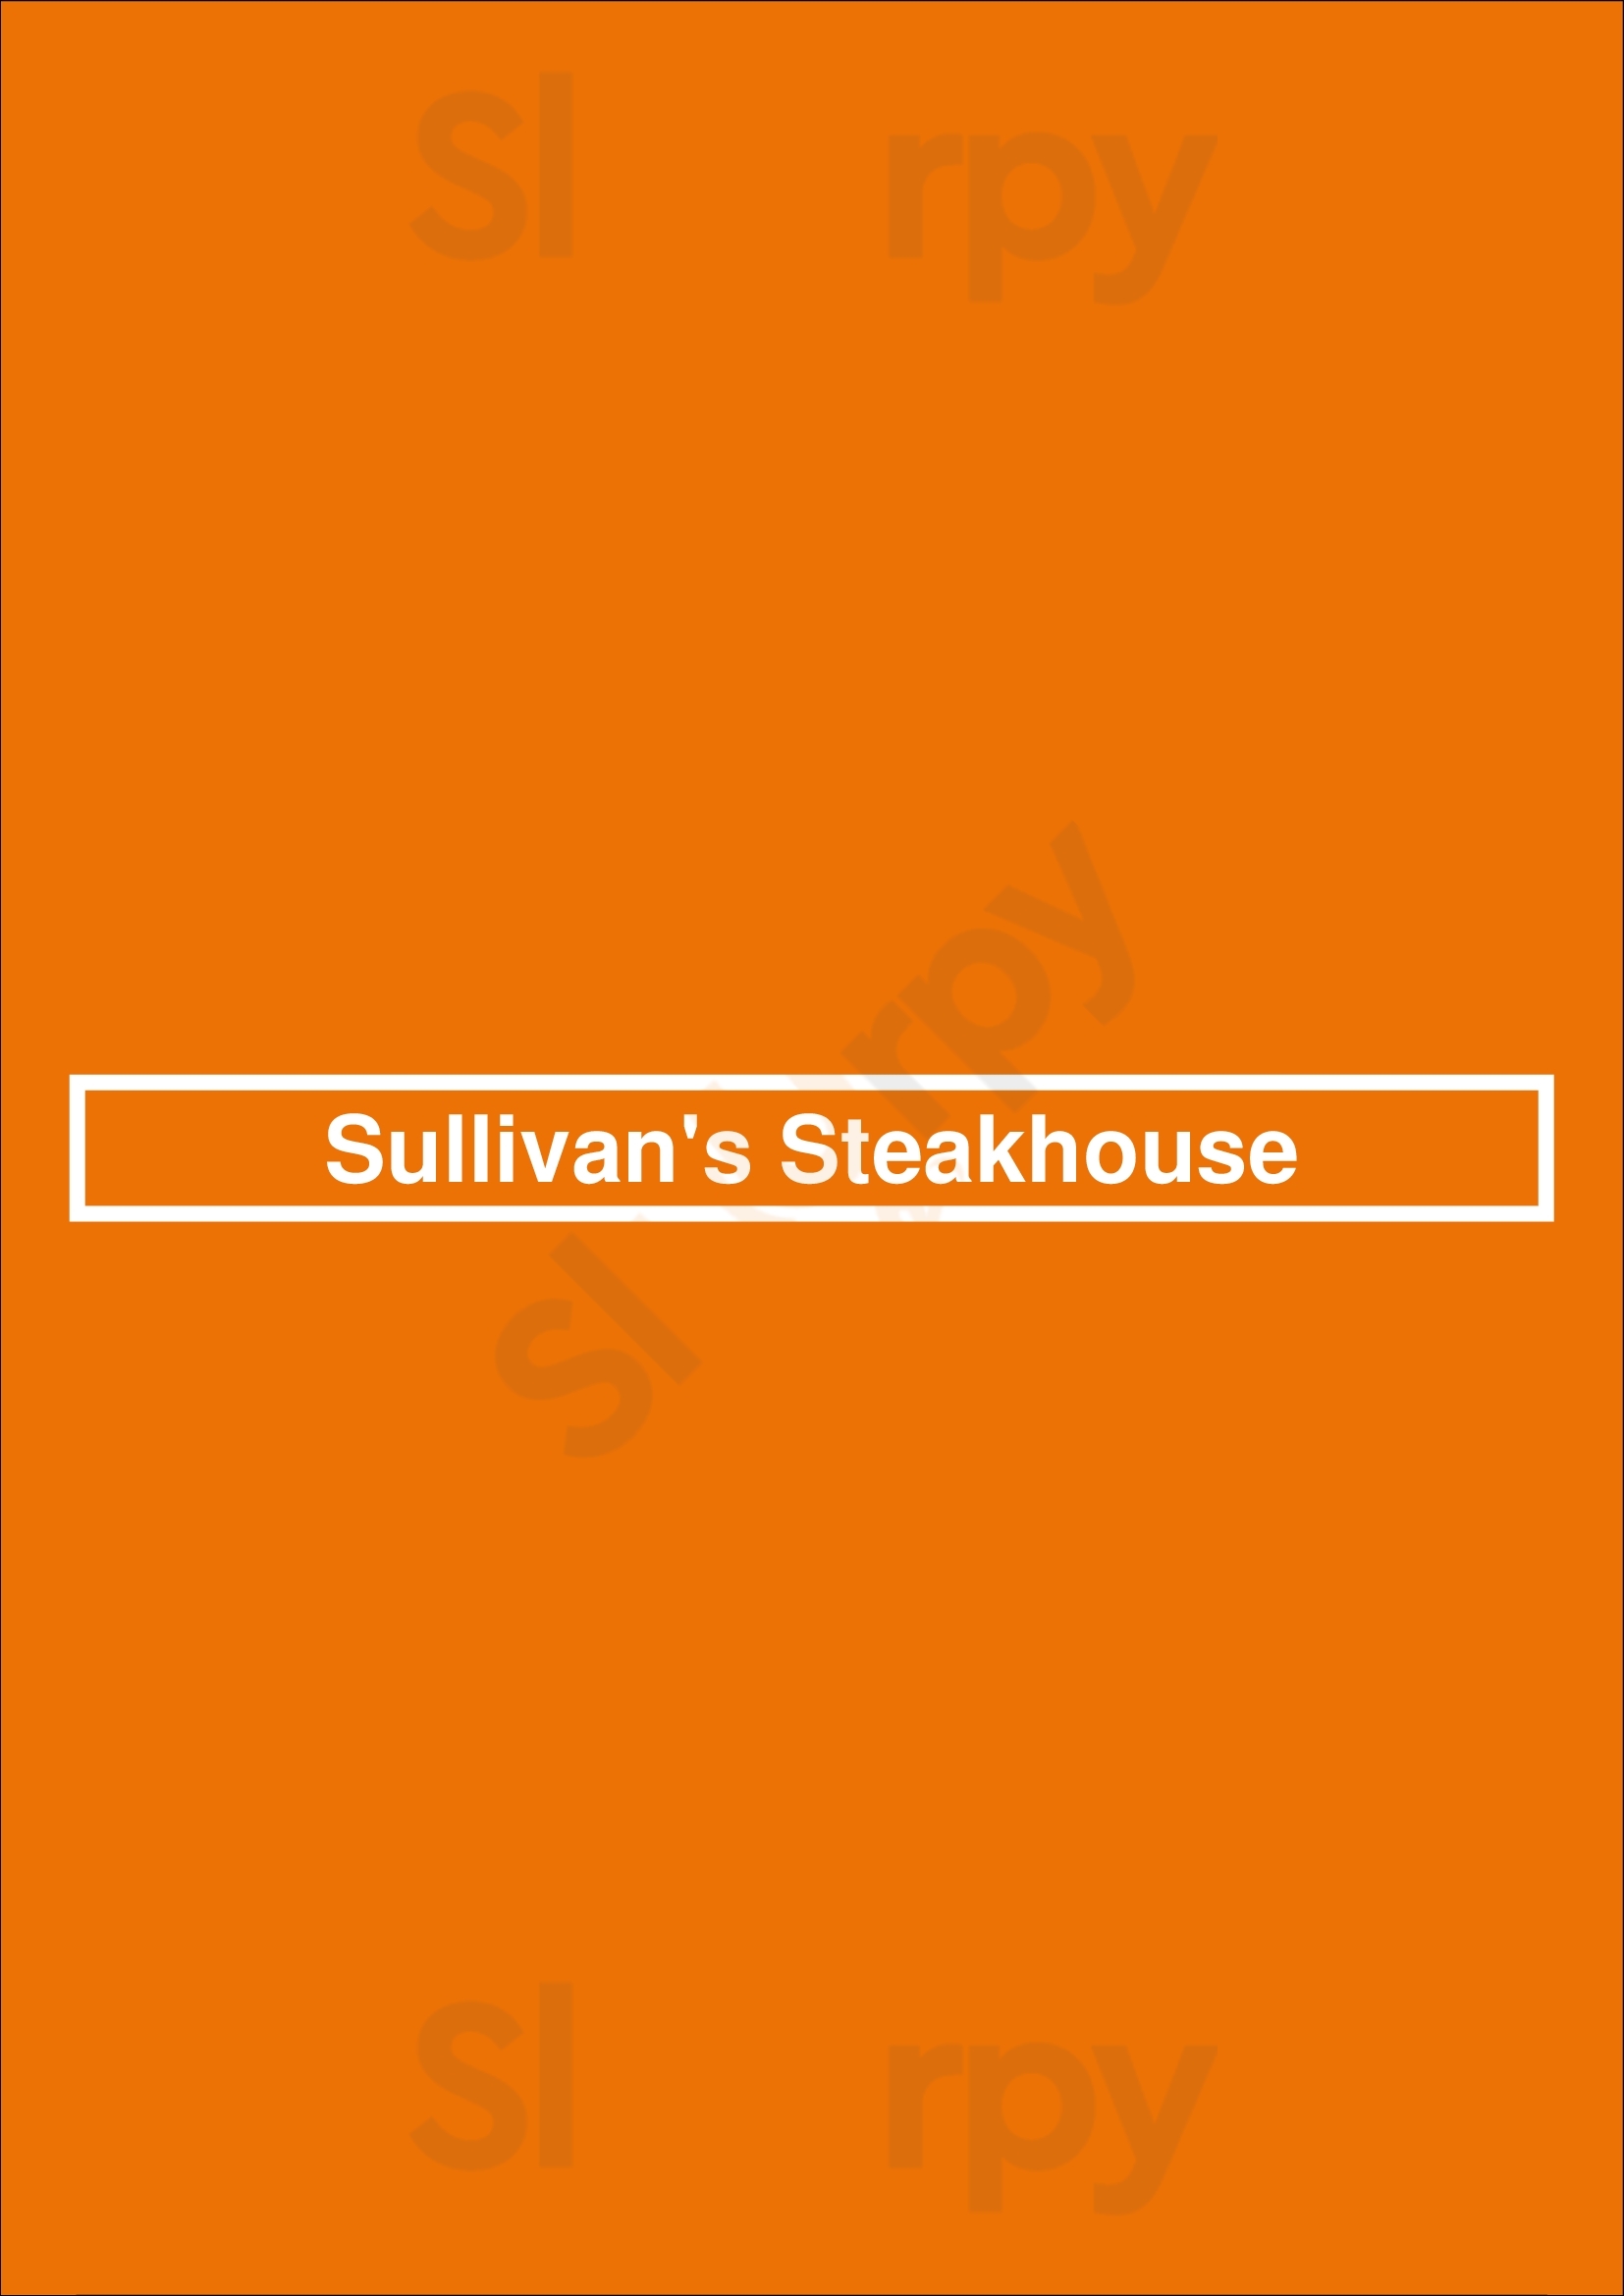 Sullivan's Steakhouse Baton Rouge Menu - 1